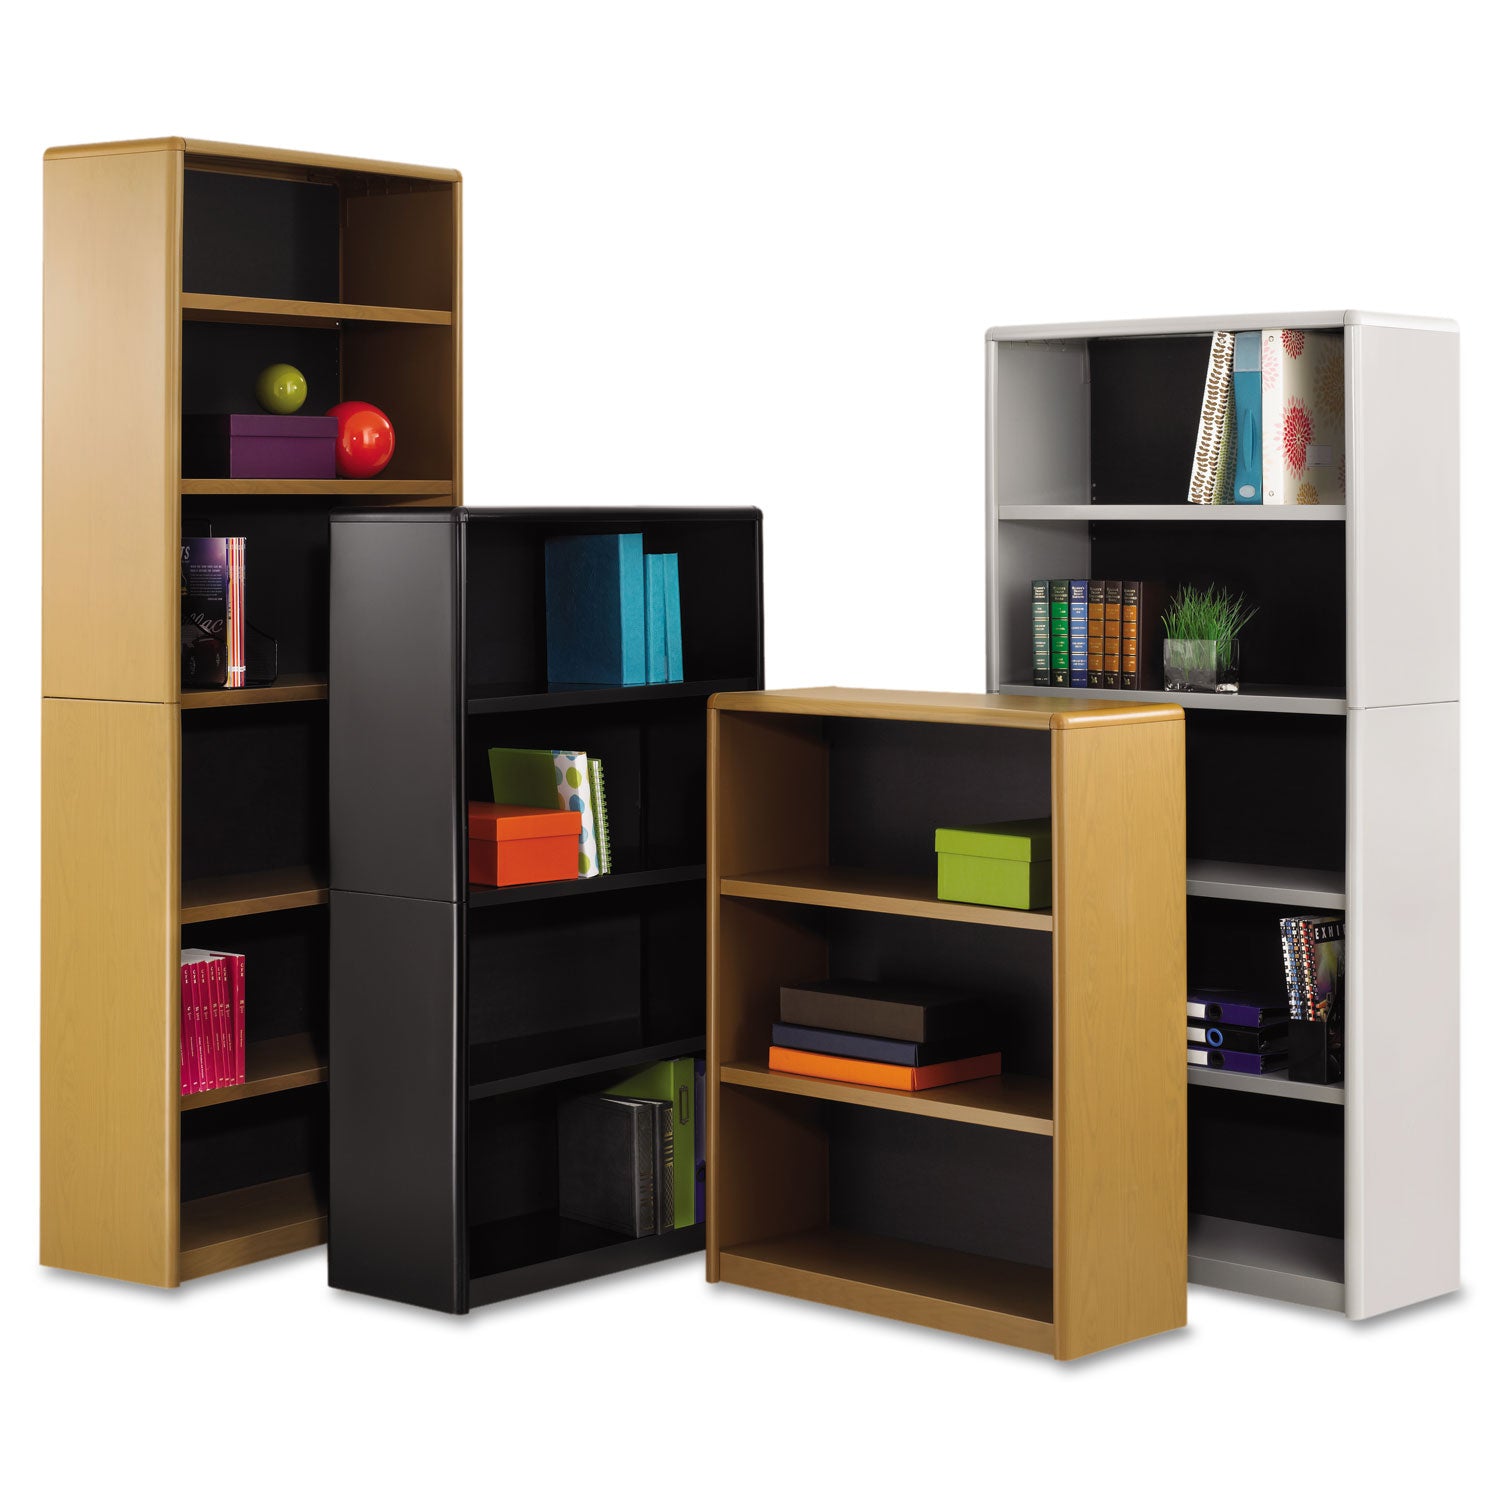 Safco Value Mate Bookcase - 31.8" x 13.5" x 80" - 6 x Shelf(ves) - Black - Steel, Fiberboard, Plastic - Assembly Required - 2